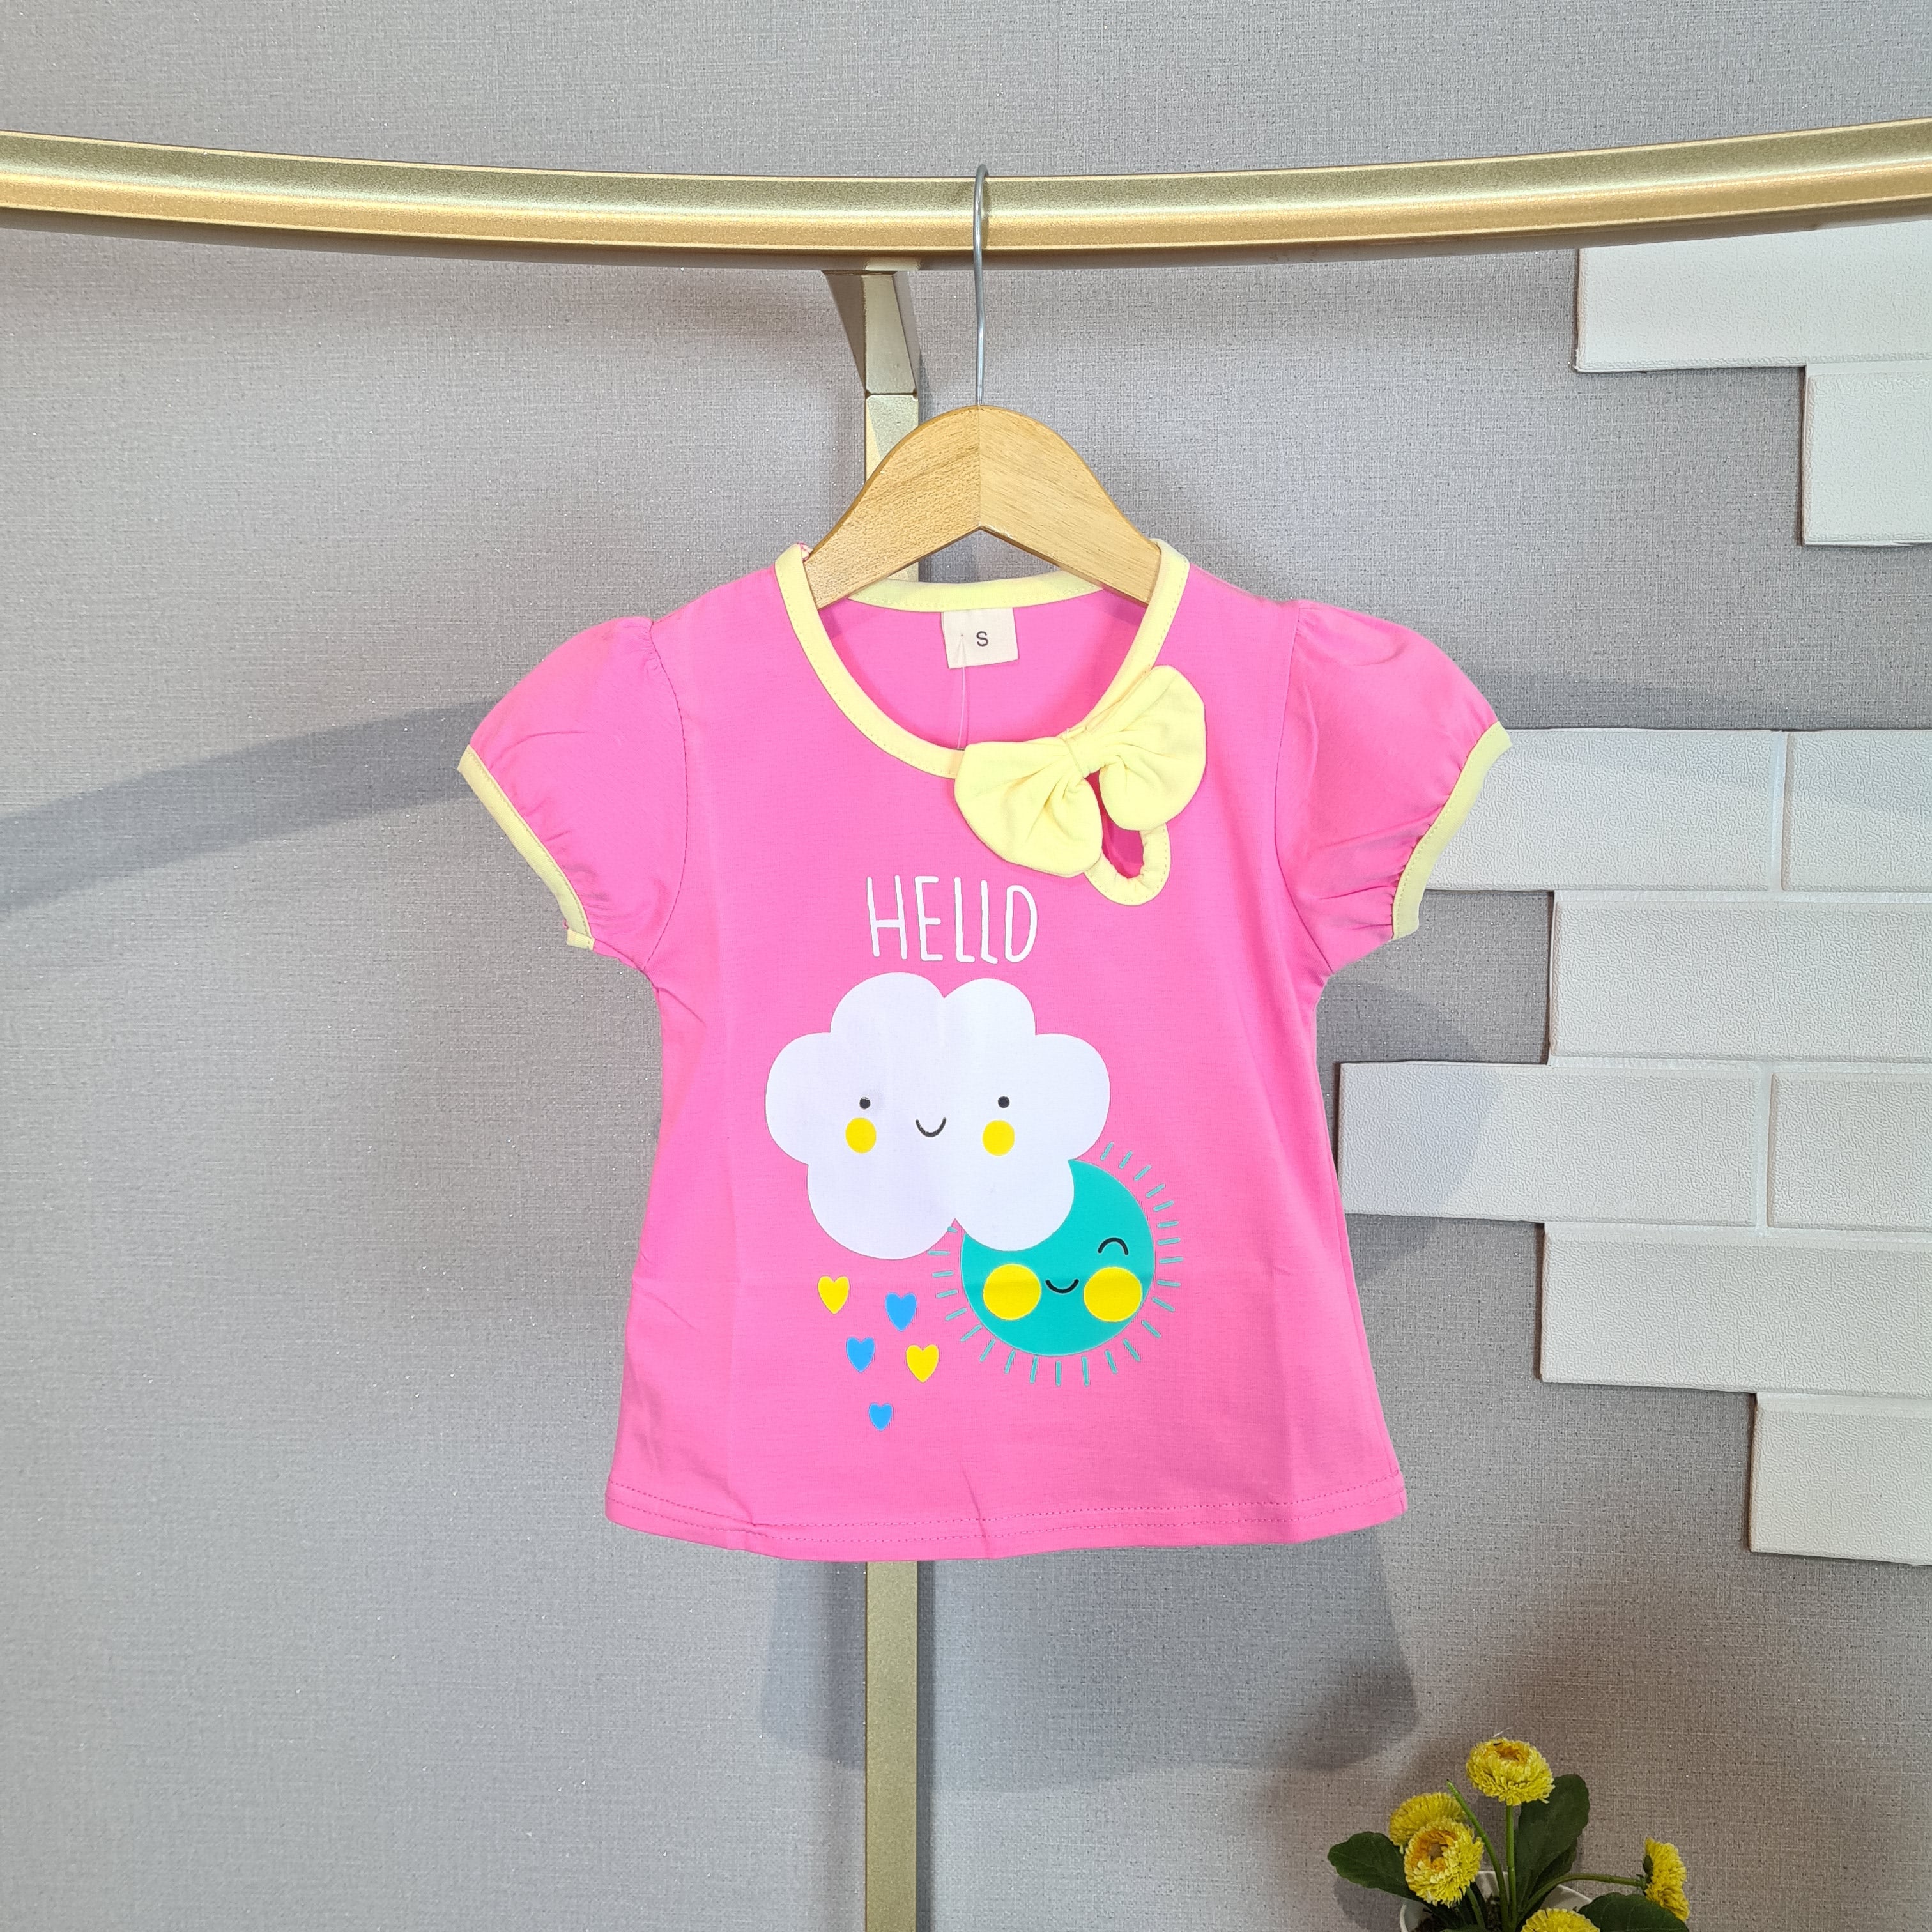 [102422] - Baju Kaos Lengan Pendek Fashion Import Anak Perempuan - Motif Hello Cloud